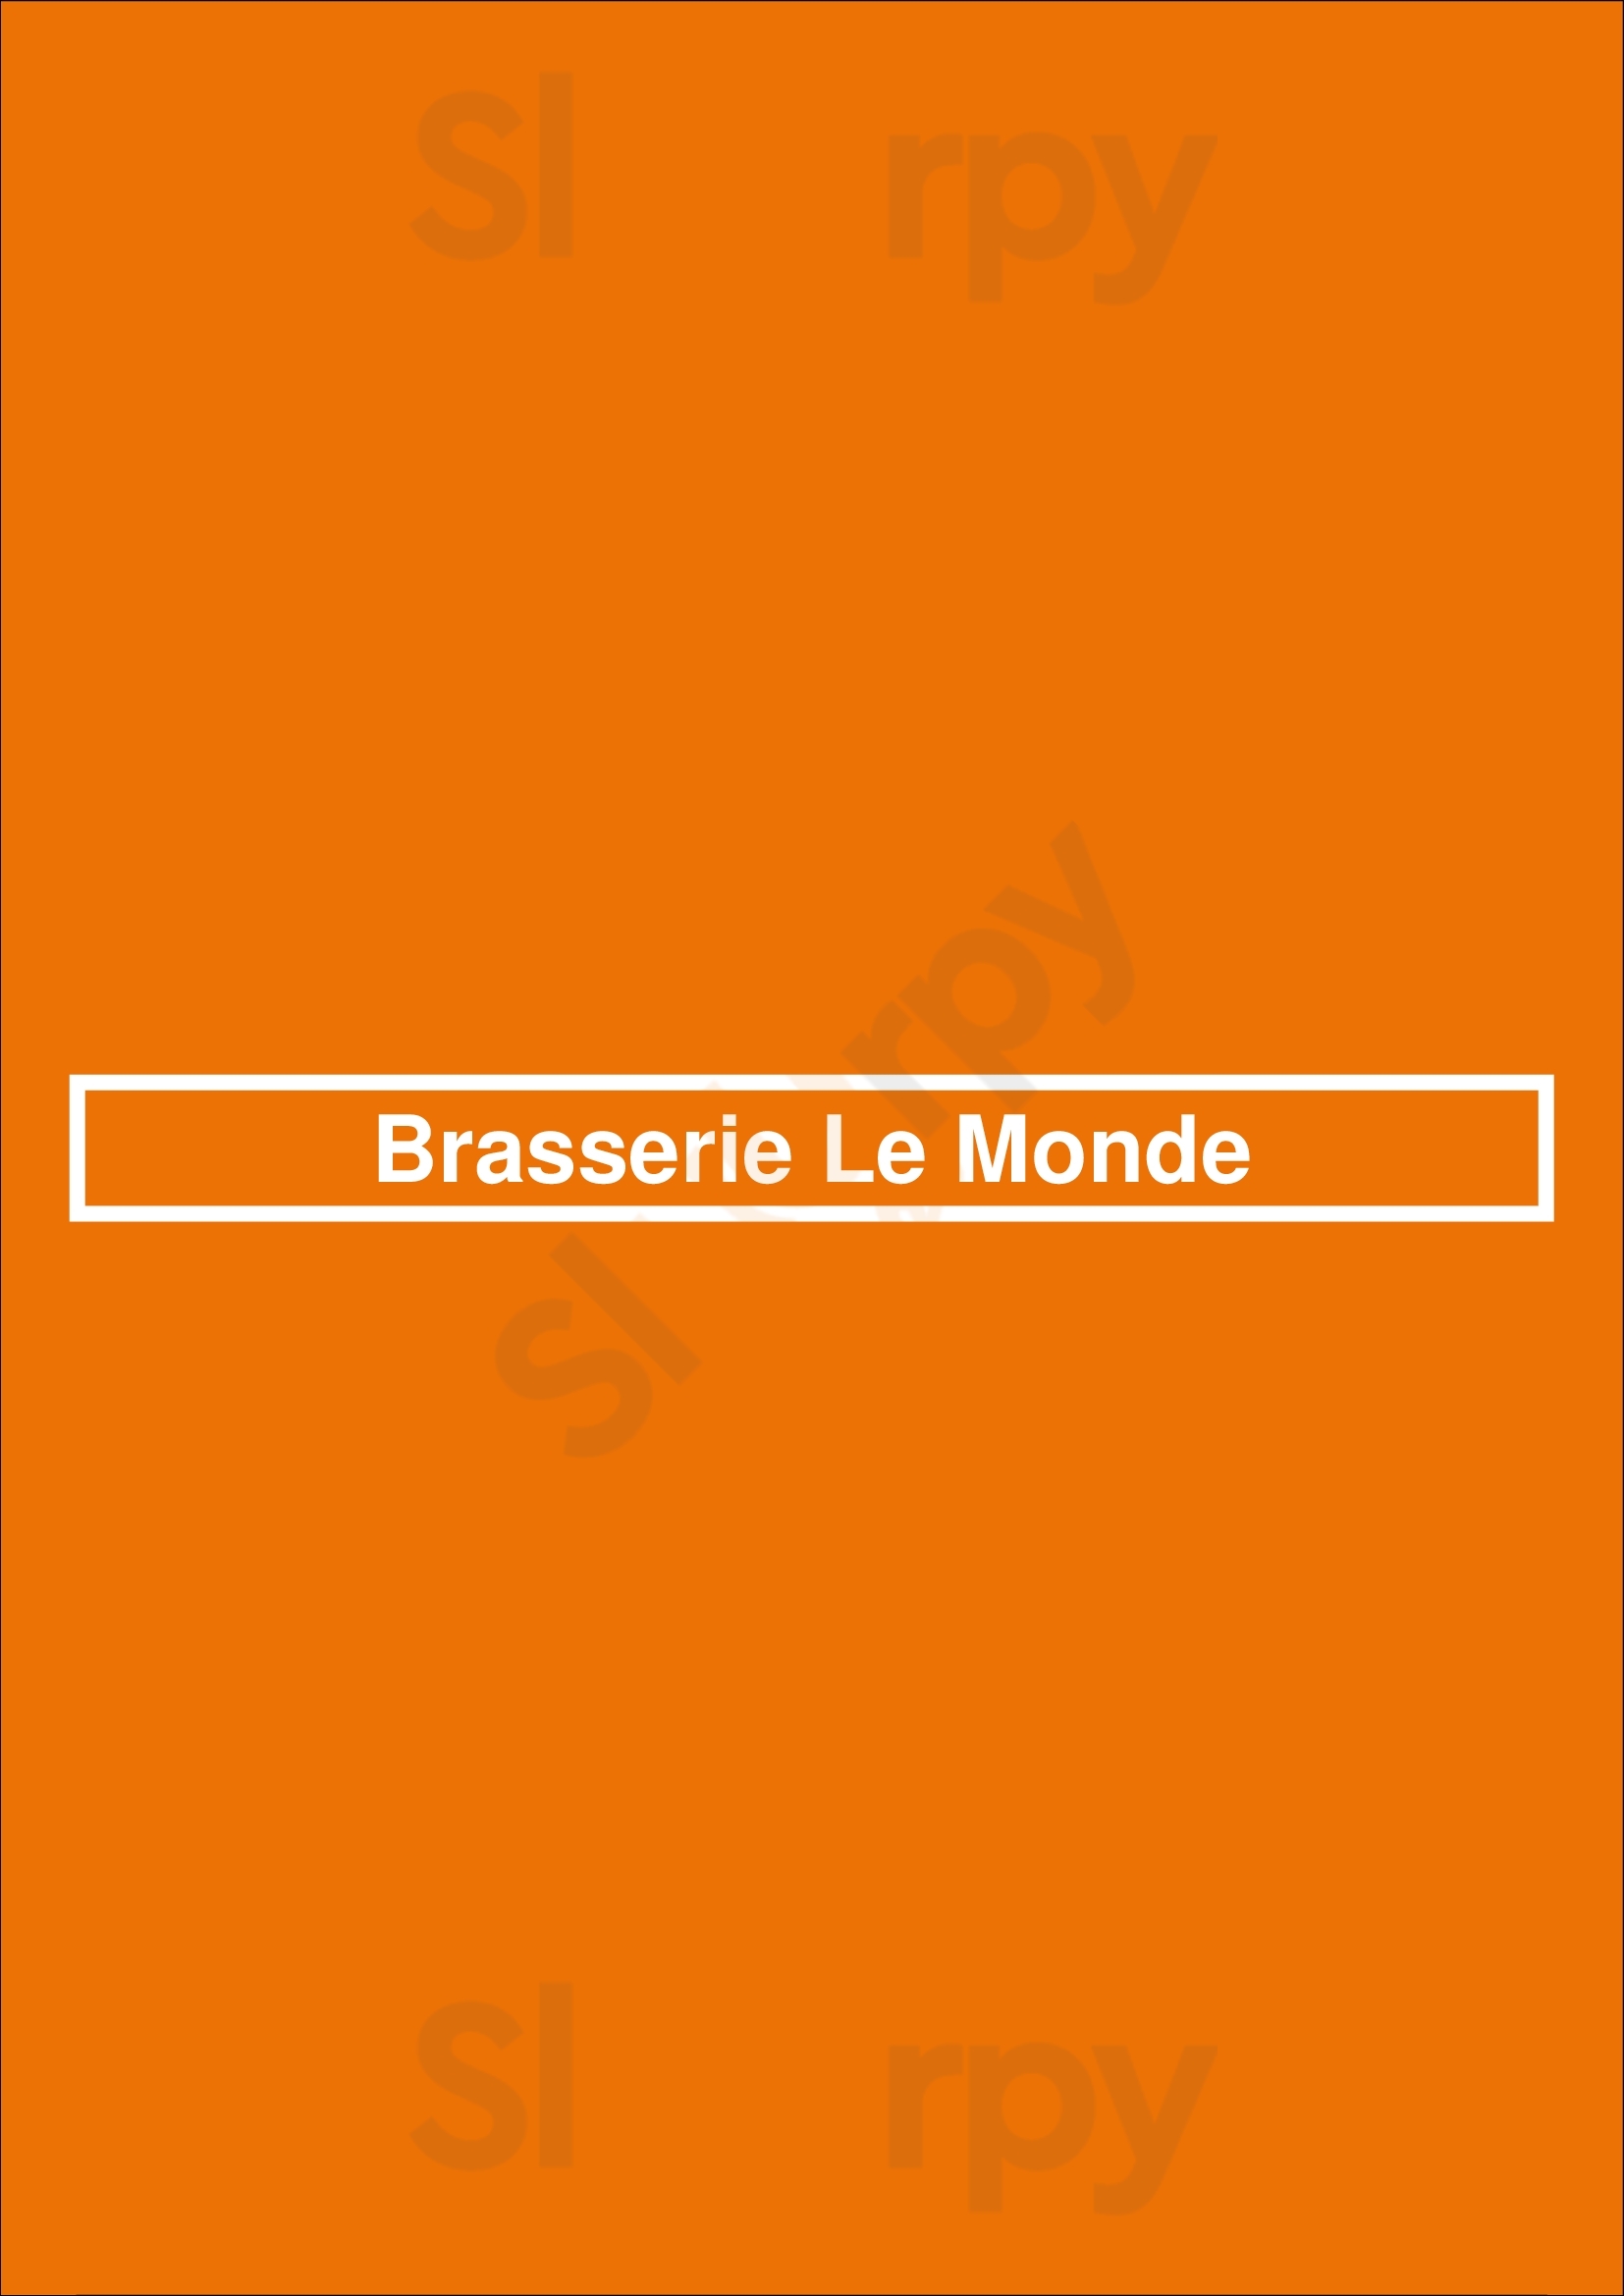 Brasserie Le Monde Wageningen Menu - 1